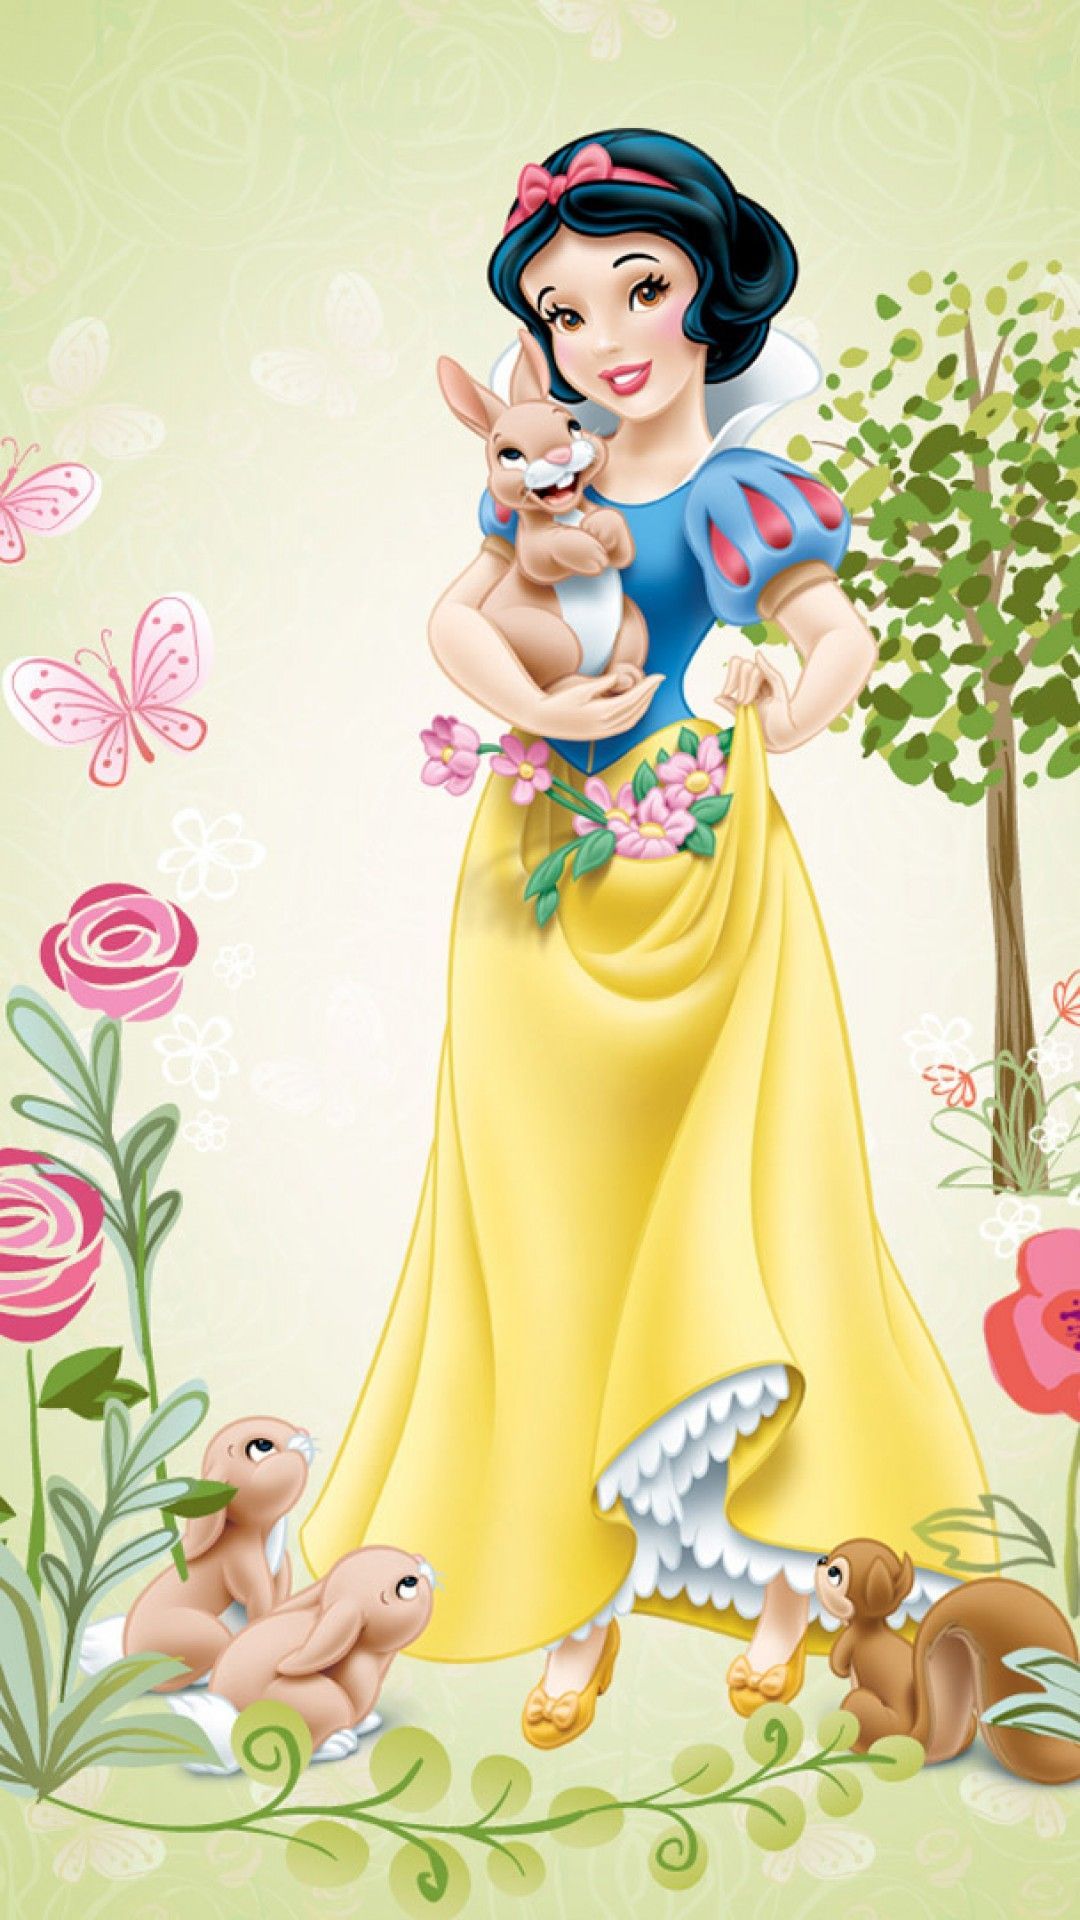 Disney Princess Wallpaper 1080p Hupages Download iPhone Wallpaper. Disney princess wallpaper, Disney princess snow white, Disney princess picture